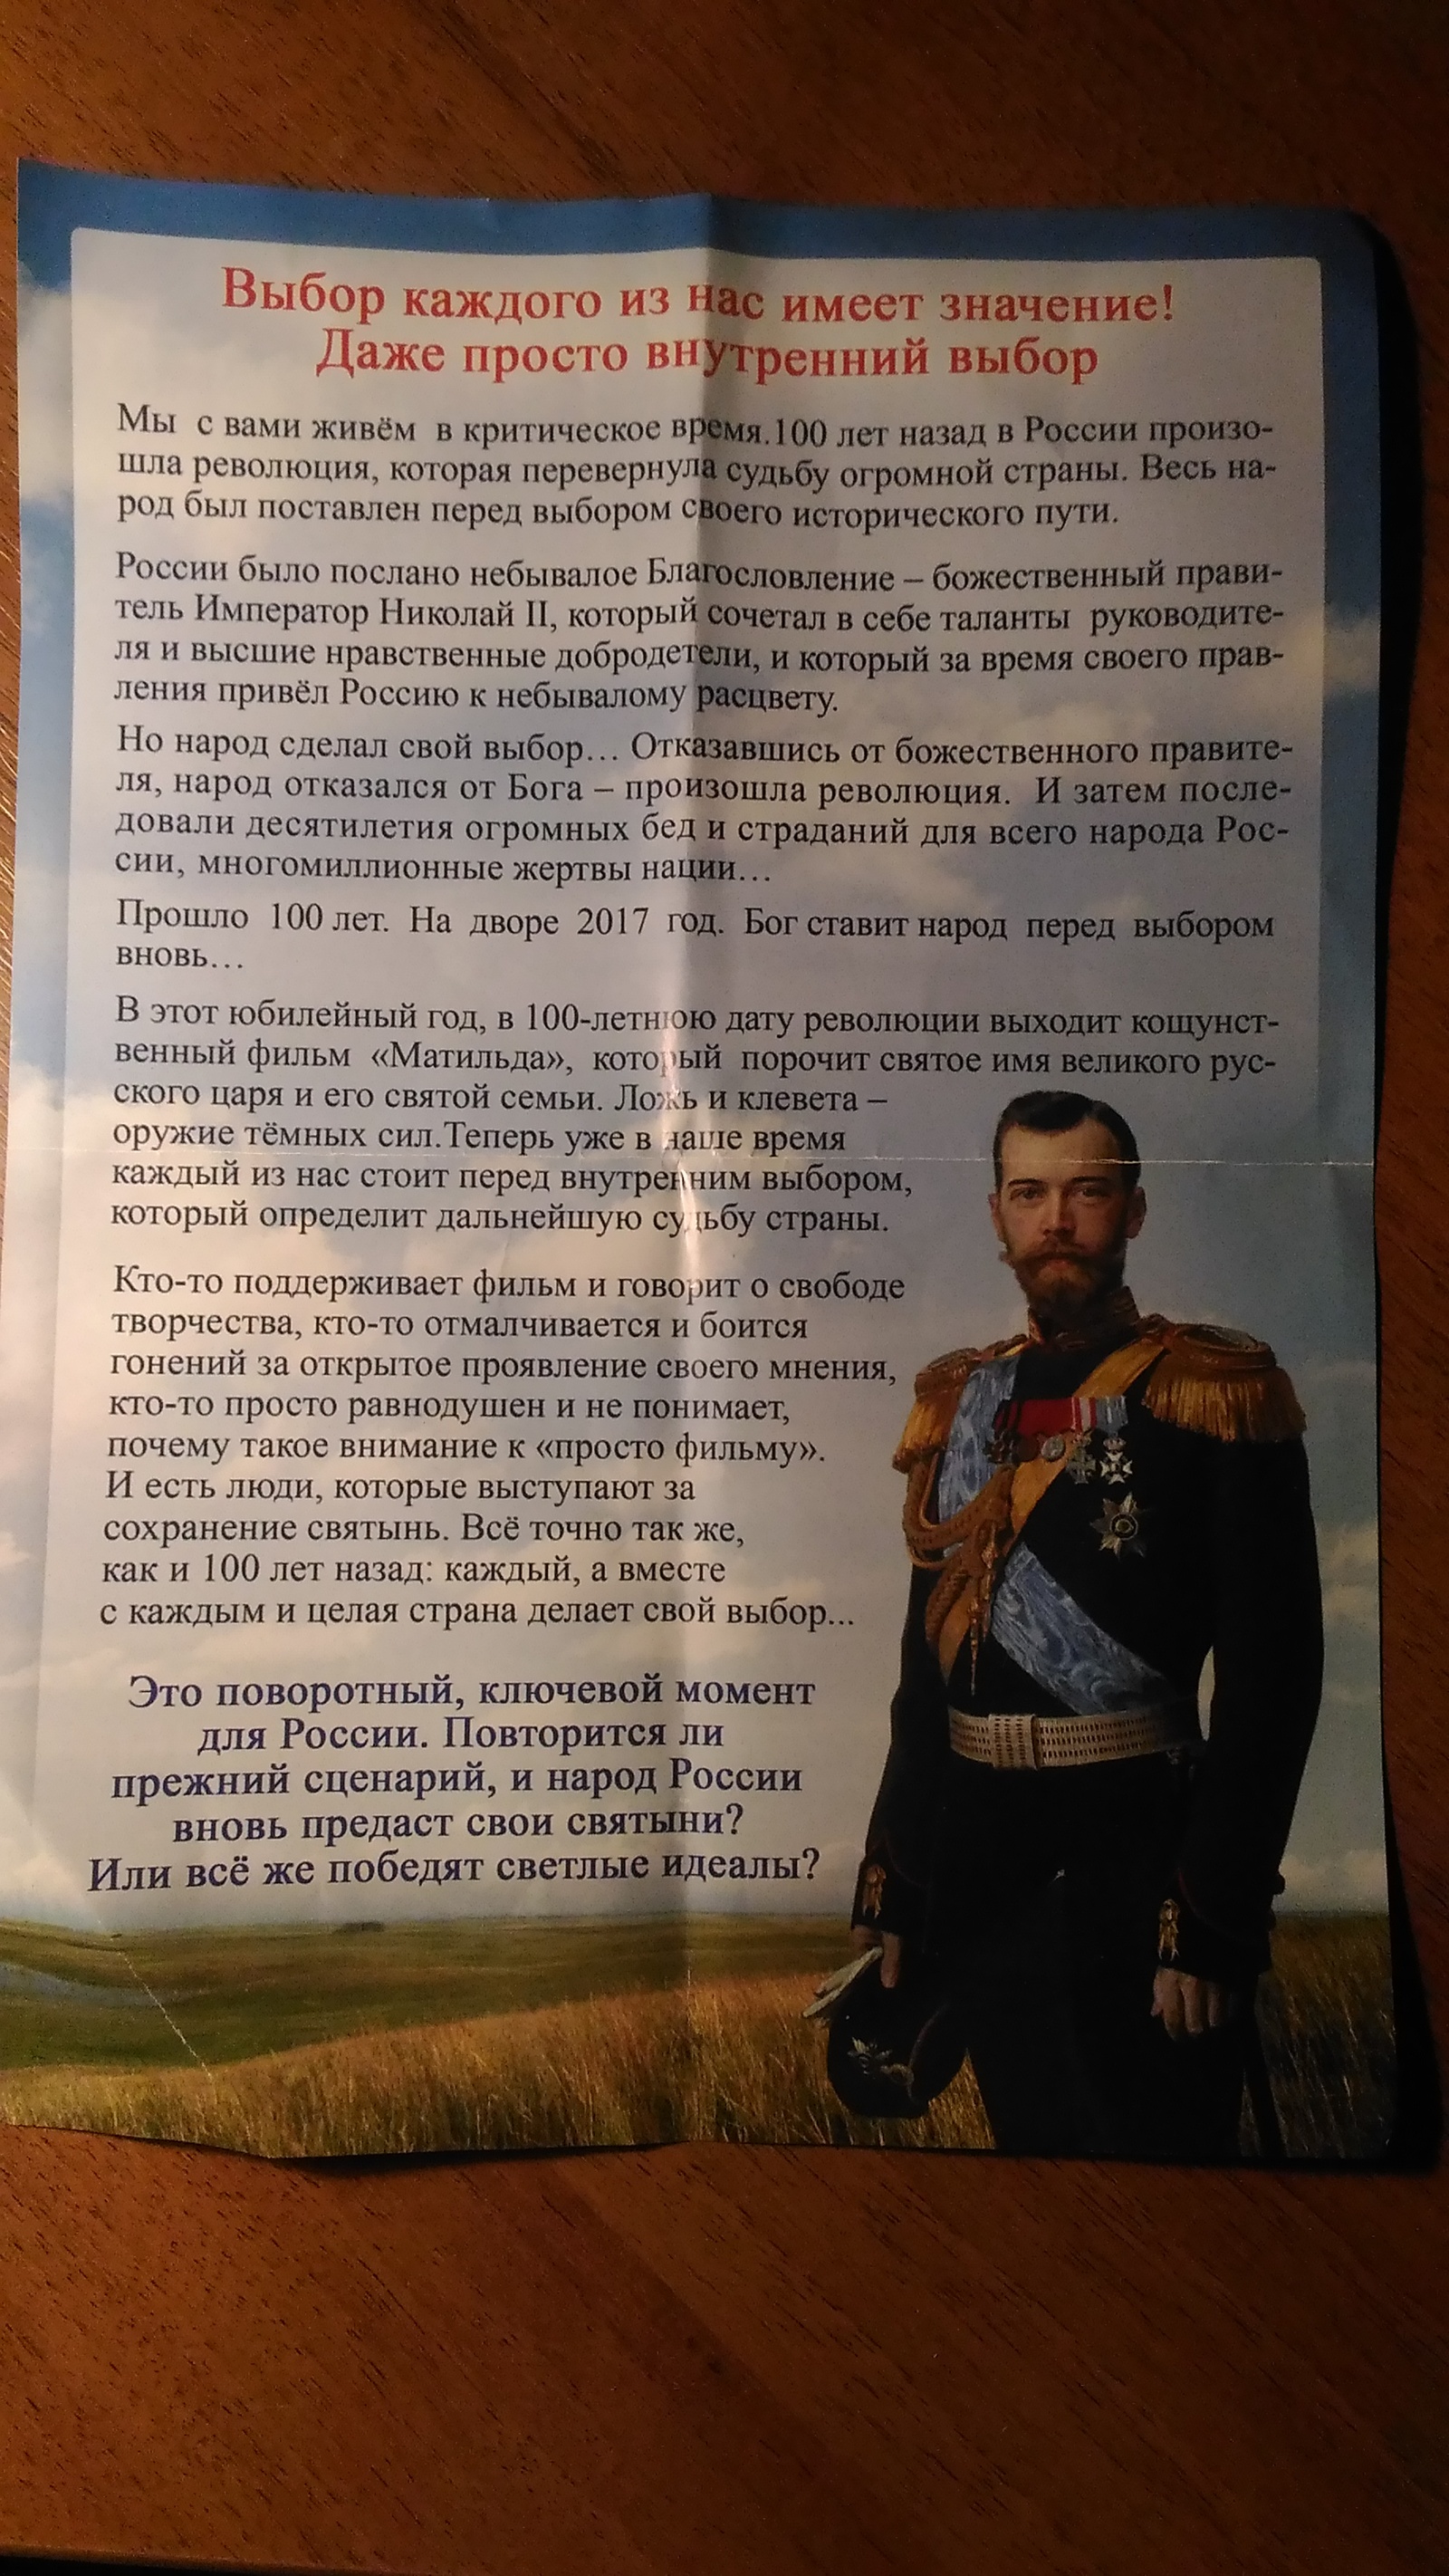 Leaflets against Matilda appeared in Cheboksary - Matilda, Nicholas II, The photo, Nobody reads tags, Longpost